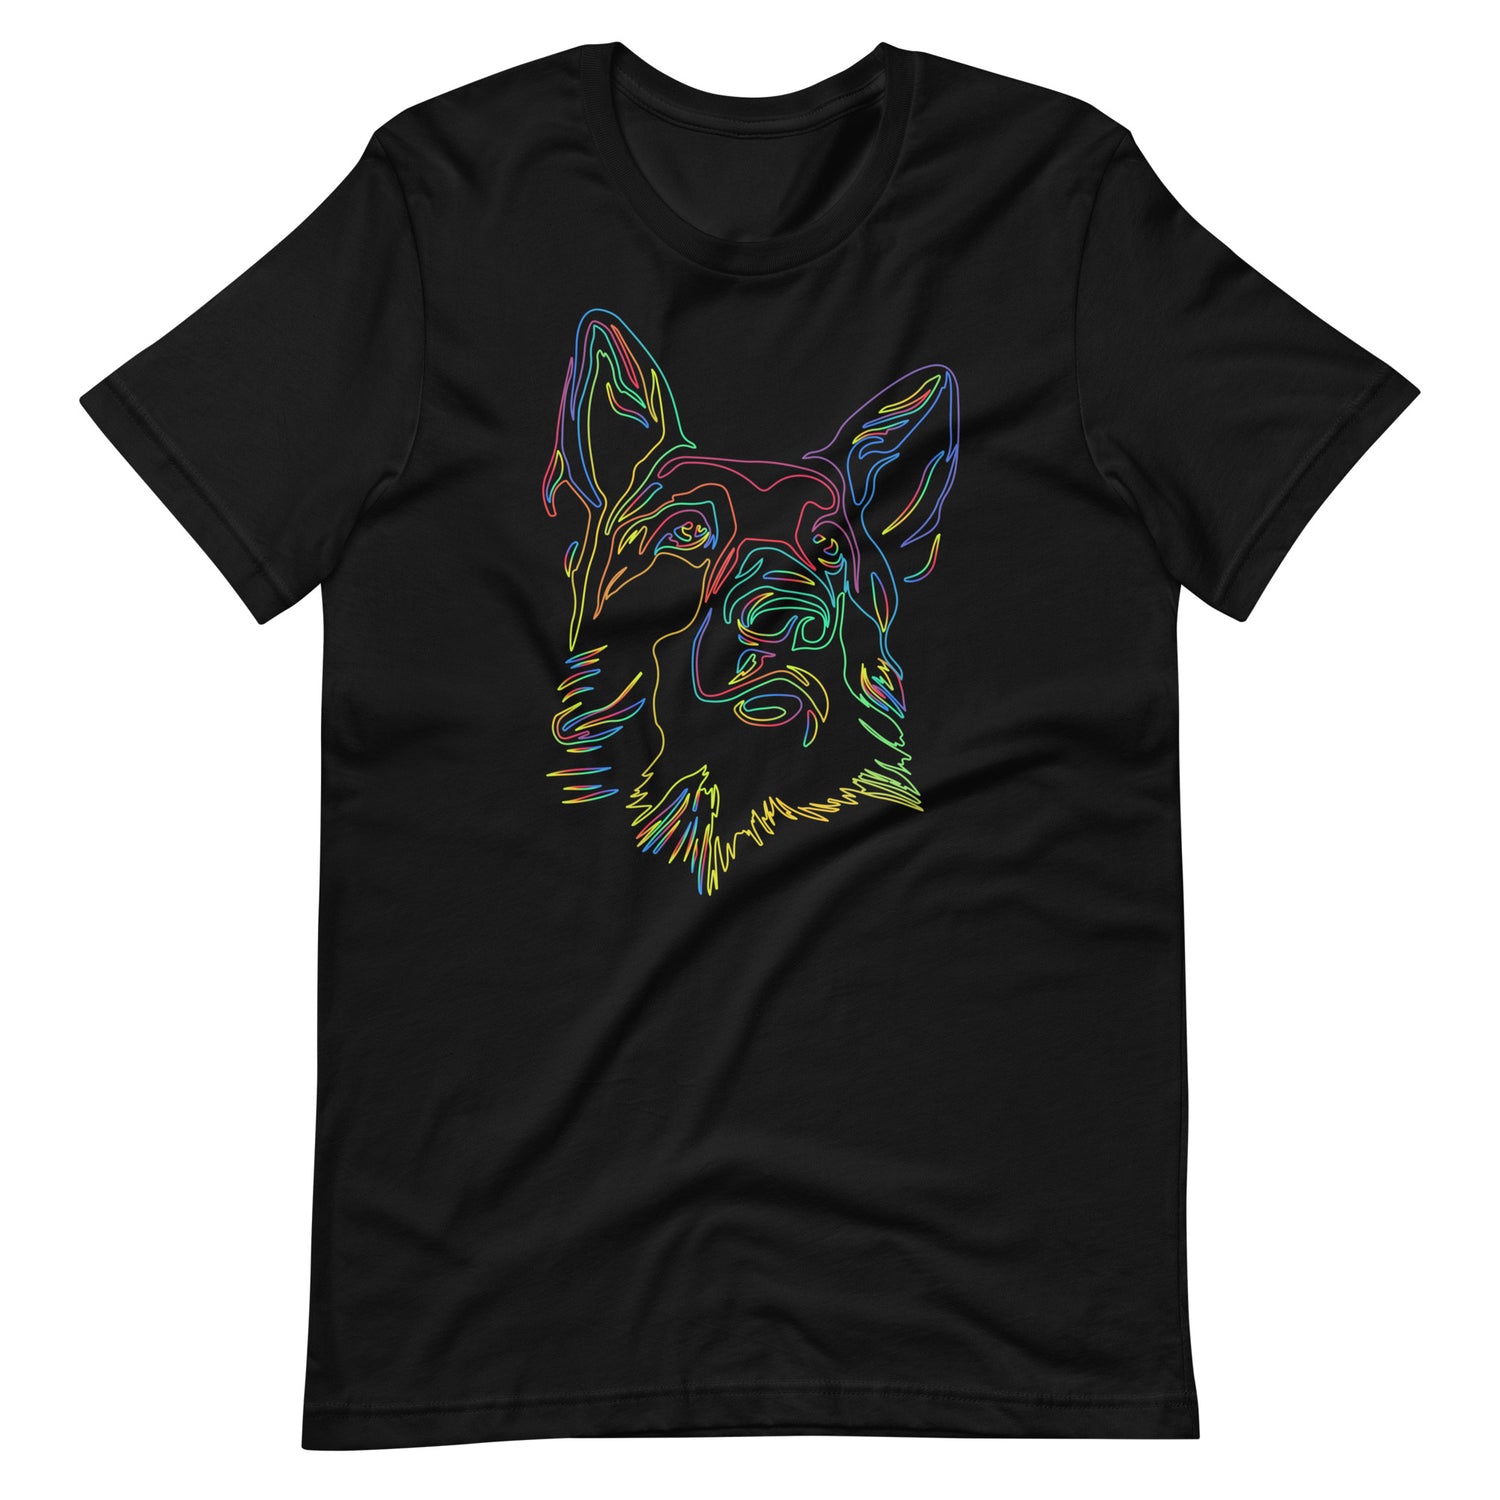 Colored line German Shepherd face on unisex black t-shirt